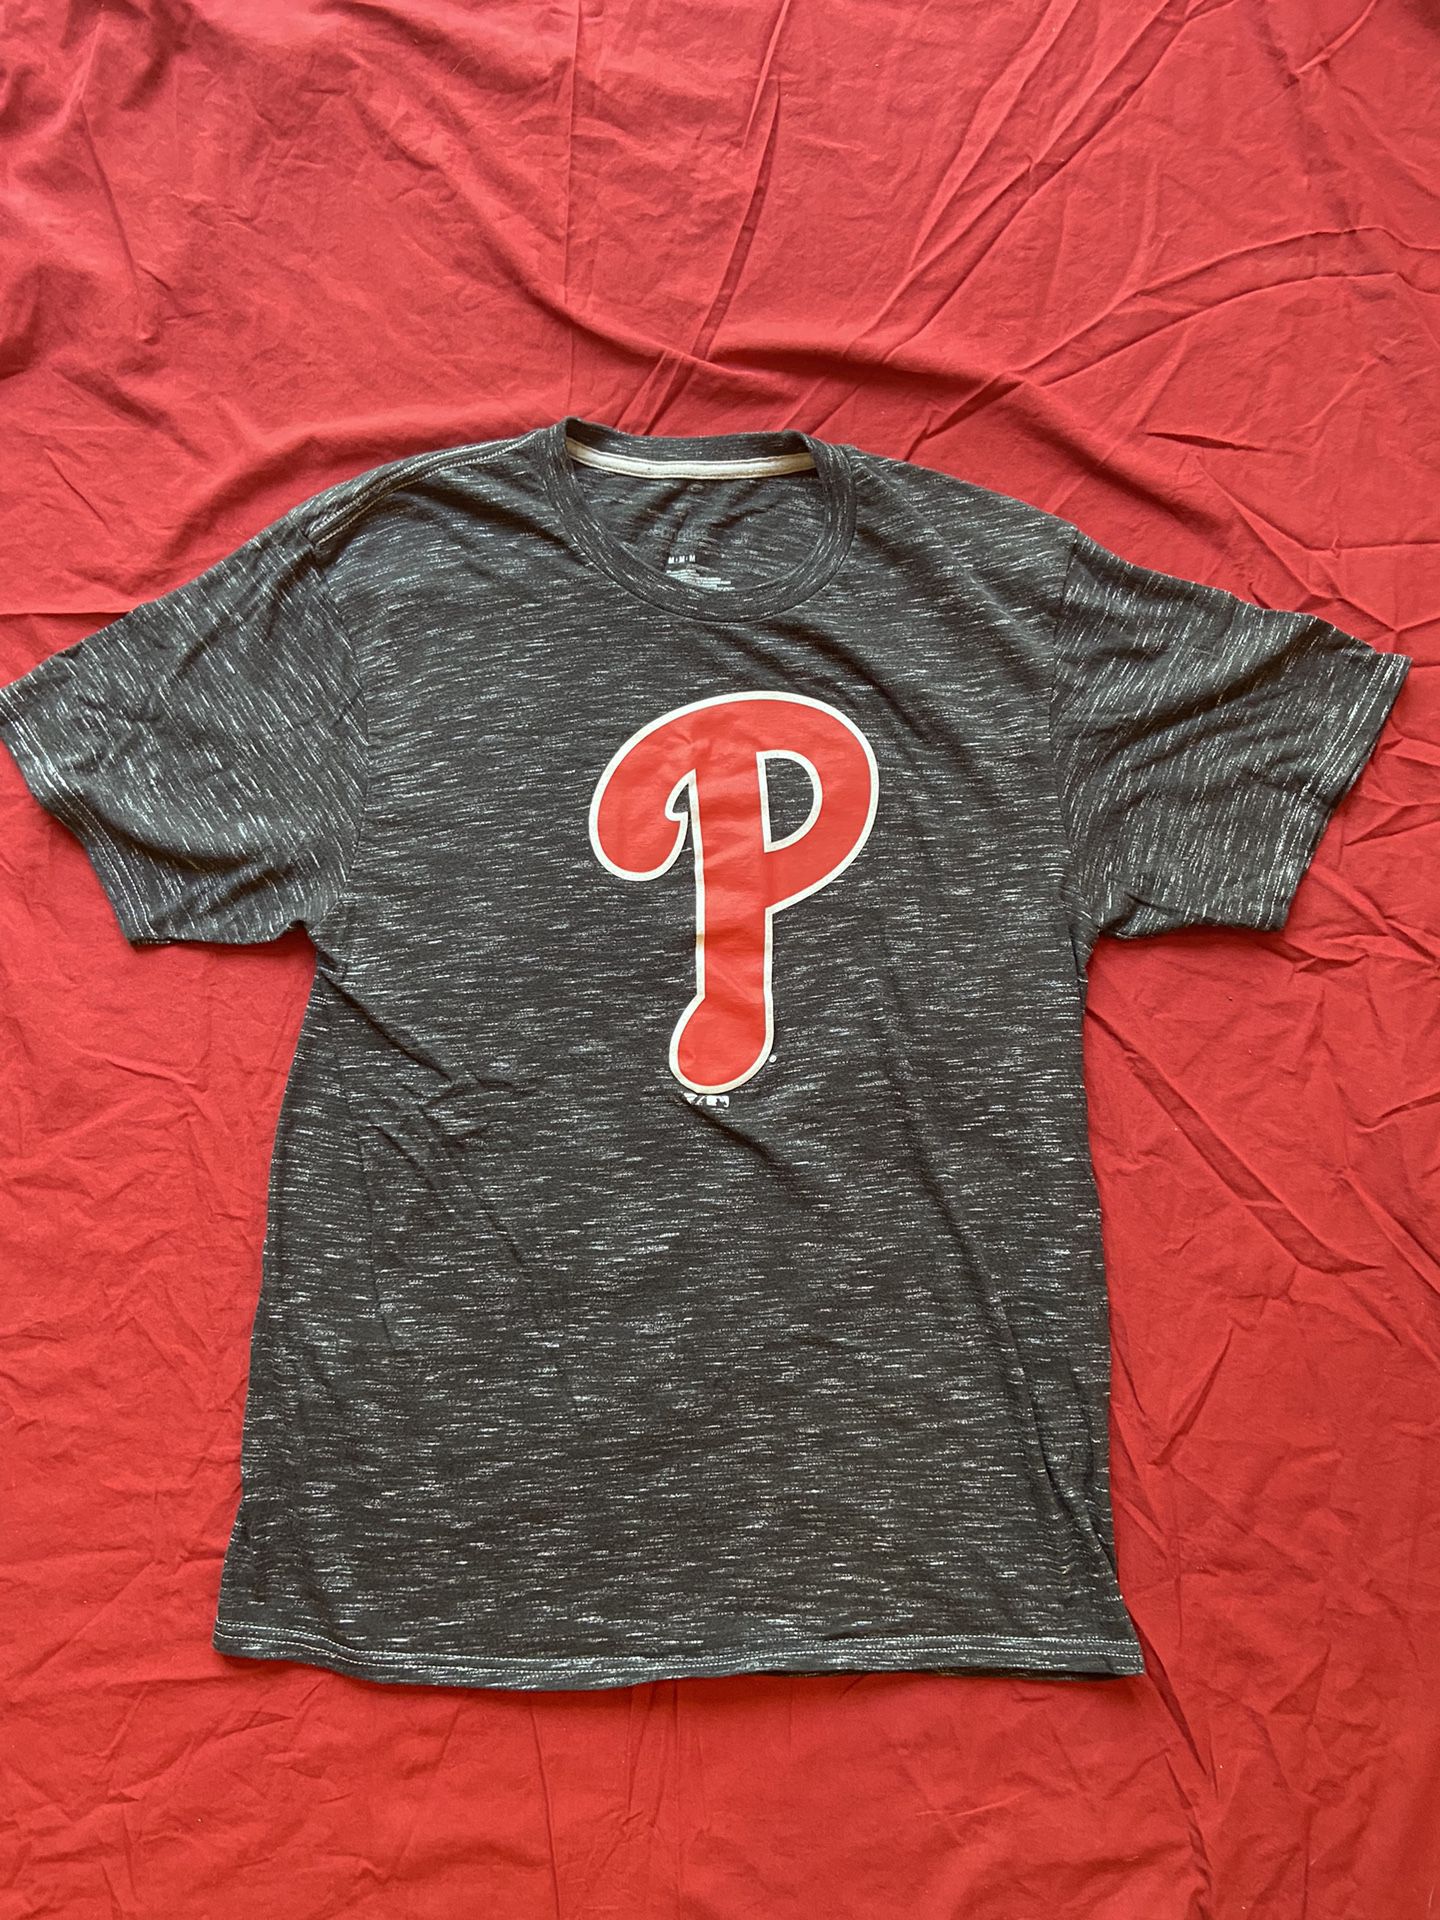 Men's Philadelphia Phillies T-Shirt Fanatics Size Medium Black